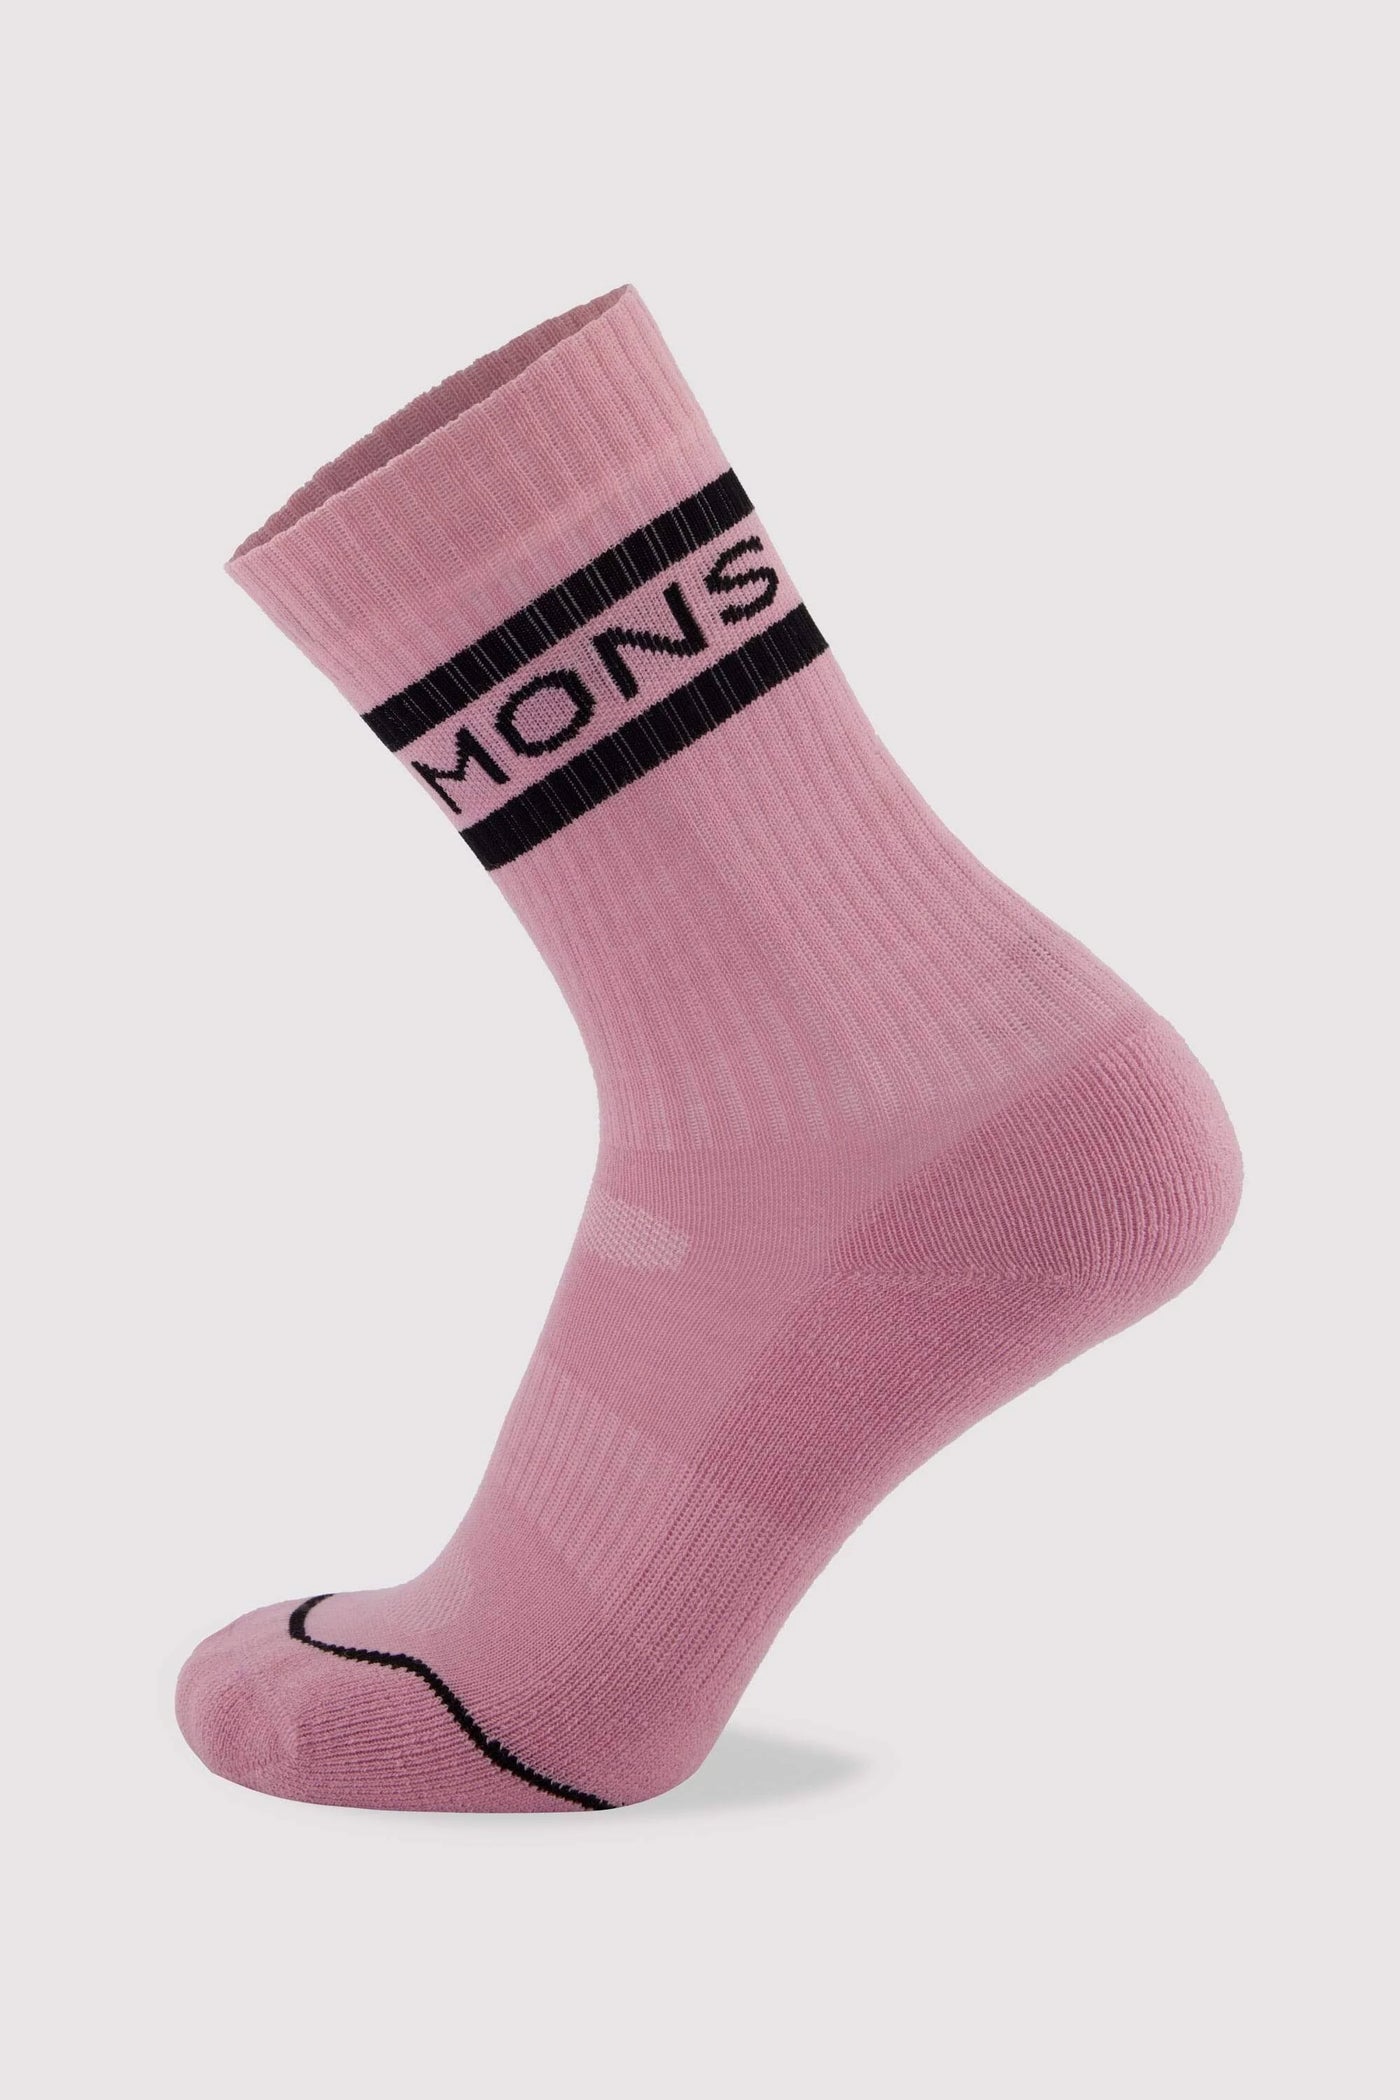 Signature Crew Sock Village Ski Hut Mons Royale Adult Socks, softgoods accessories, Spring 2023